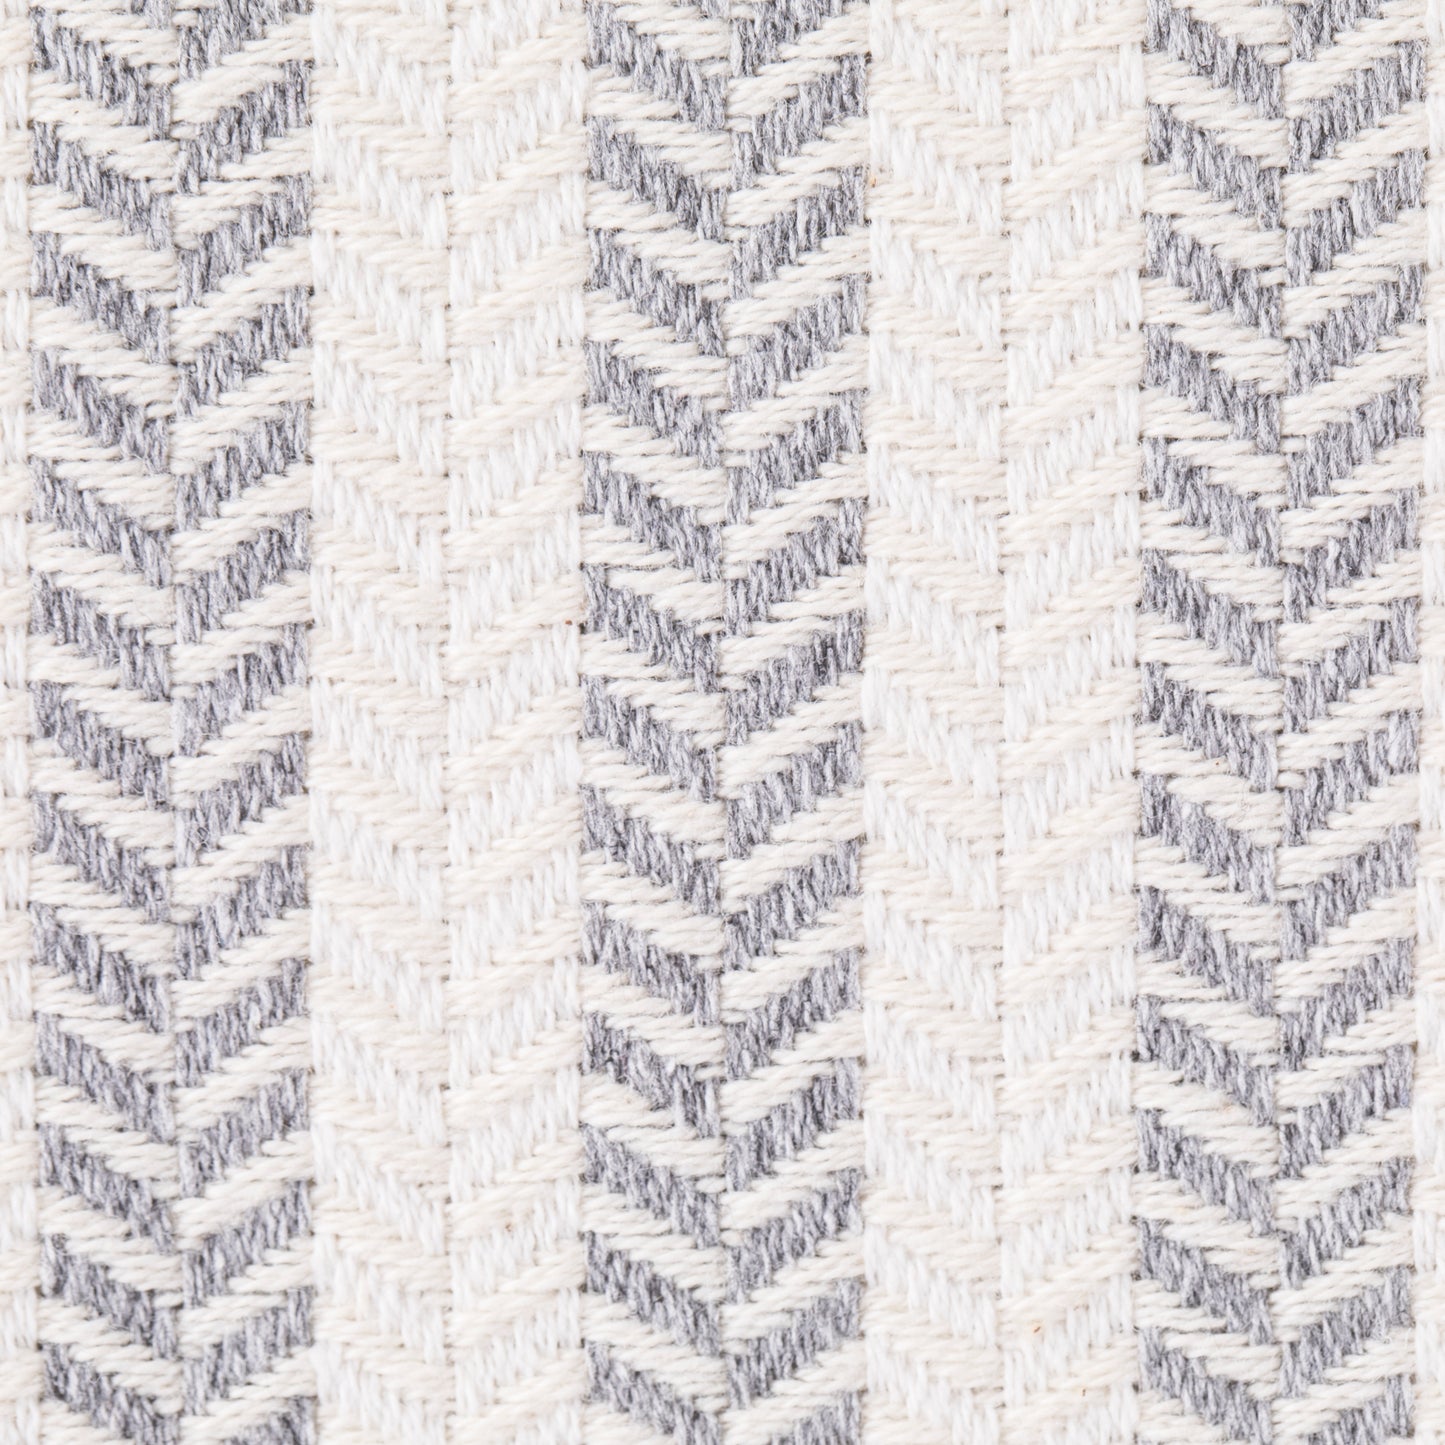 Stripe gæstehåndklæde (grå)